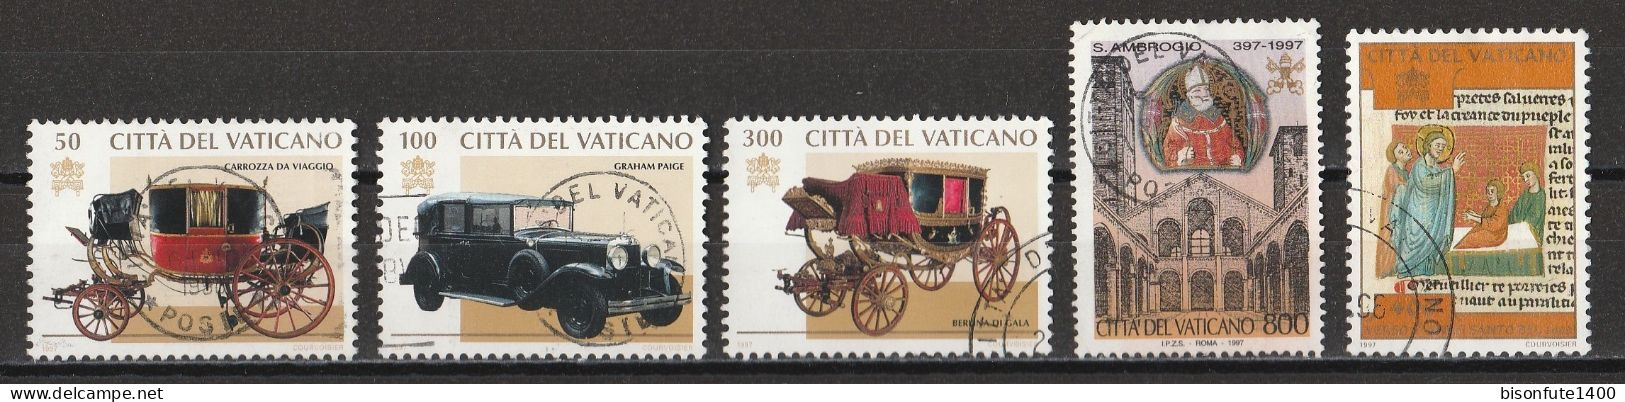 Vatican 1997 : Timbres Yvert & Tellier N° 1059 - 1060 - 1061 - 1083 - 1084 - 1089 - 1090 - 1091 - 1092 Et 1093 Oblitérés - Usados